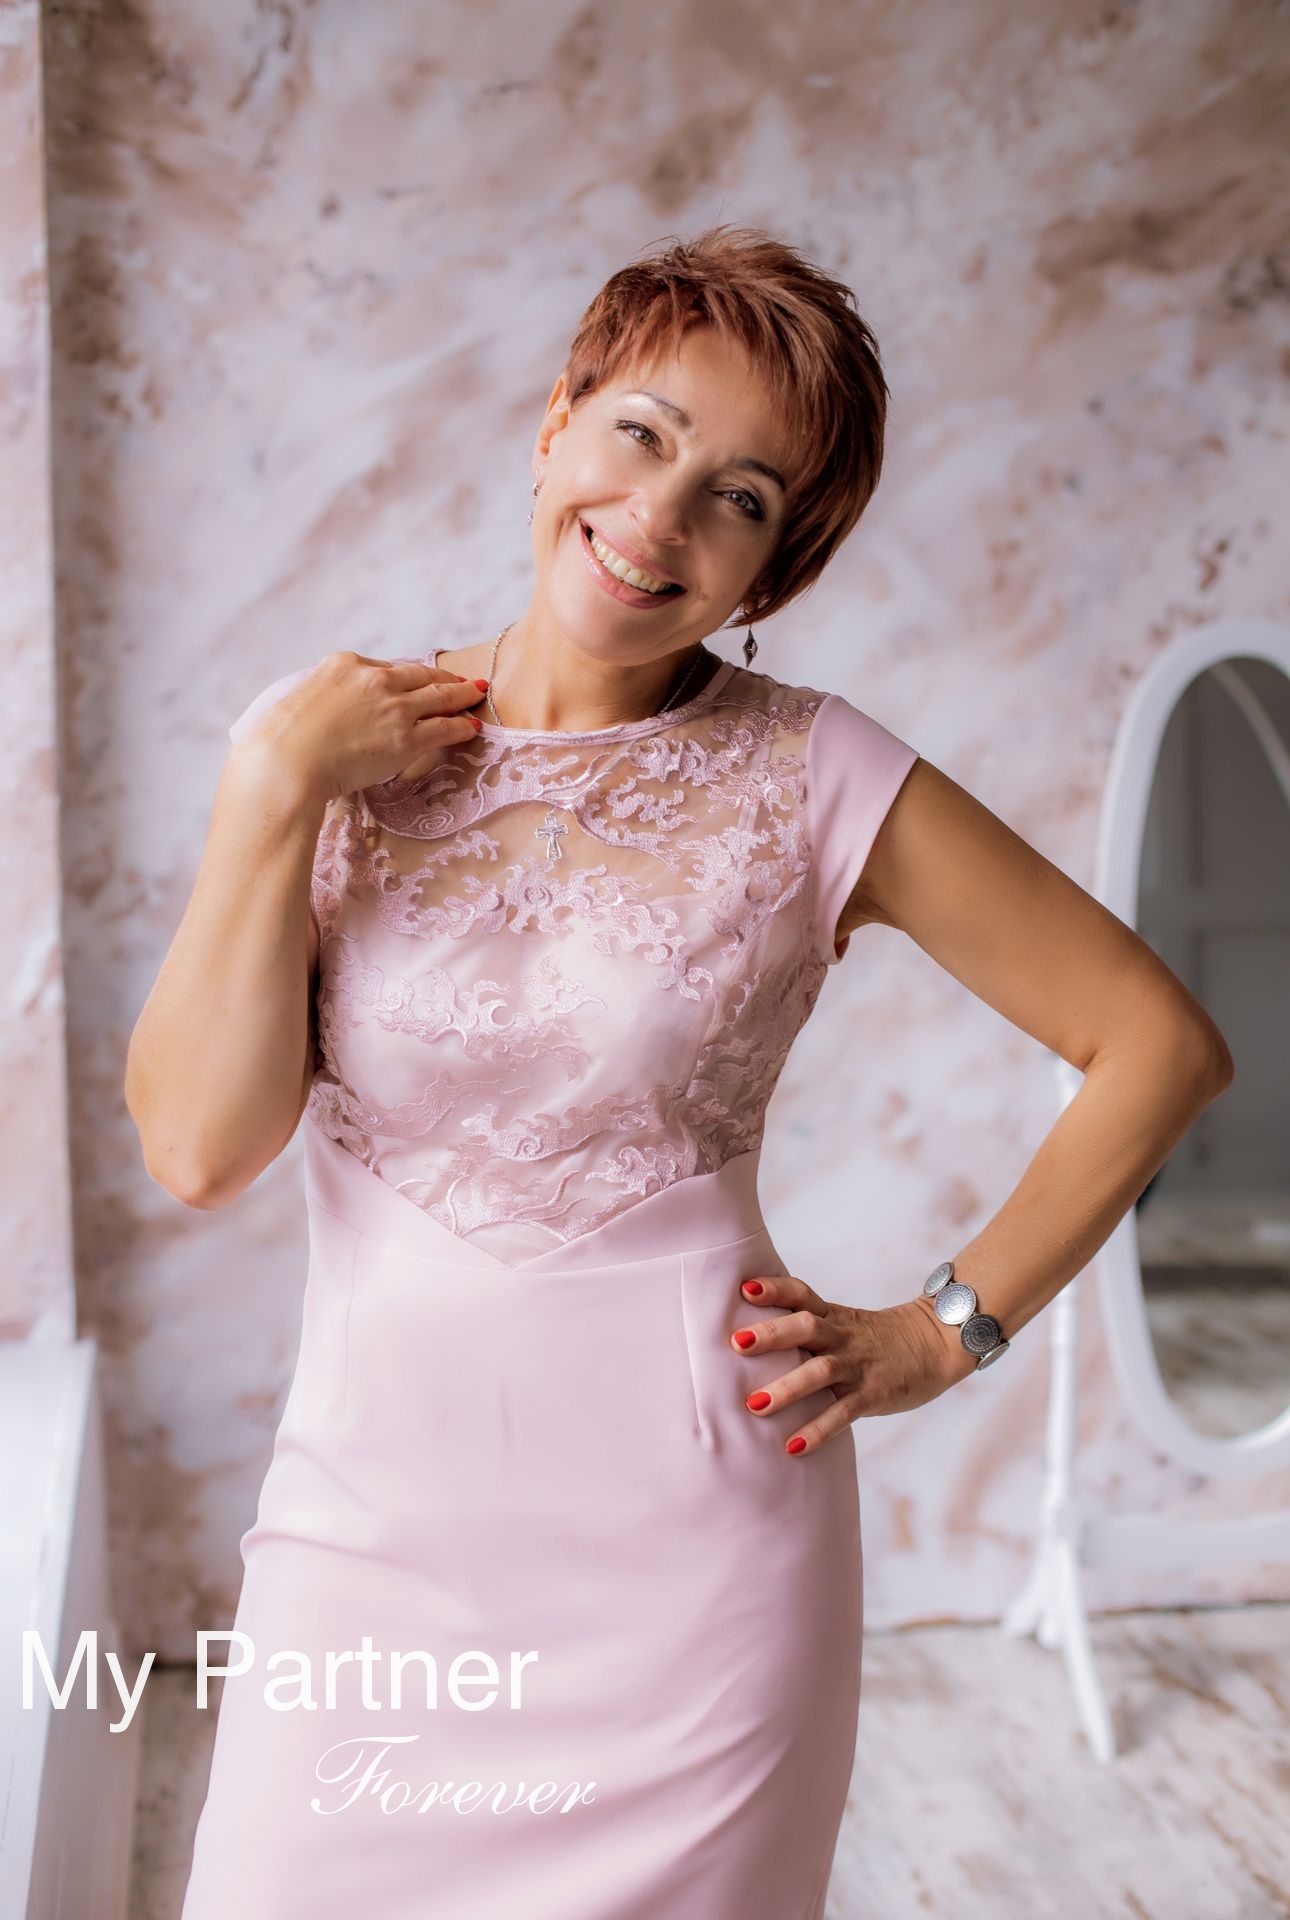 International Dating Service to Meet Lyudmila from Zaporozhye, Ukraine